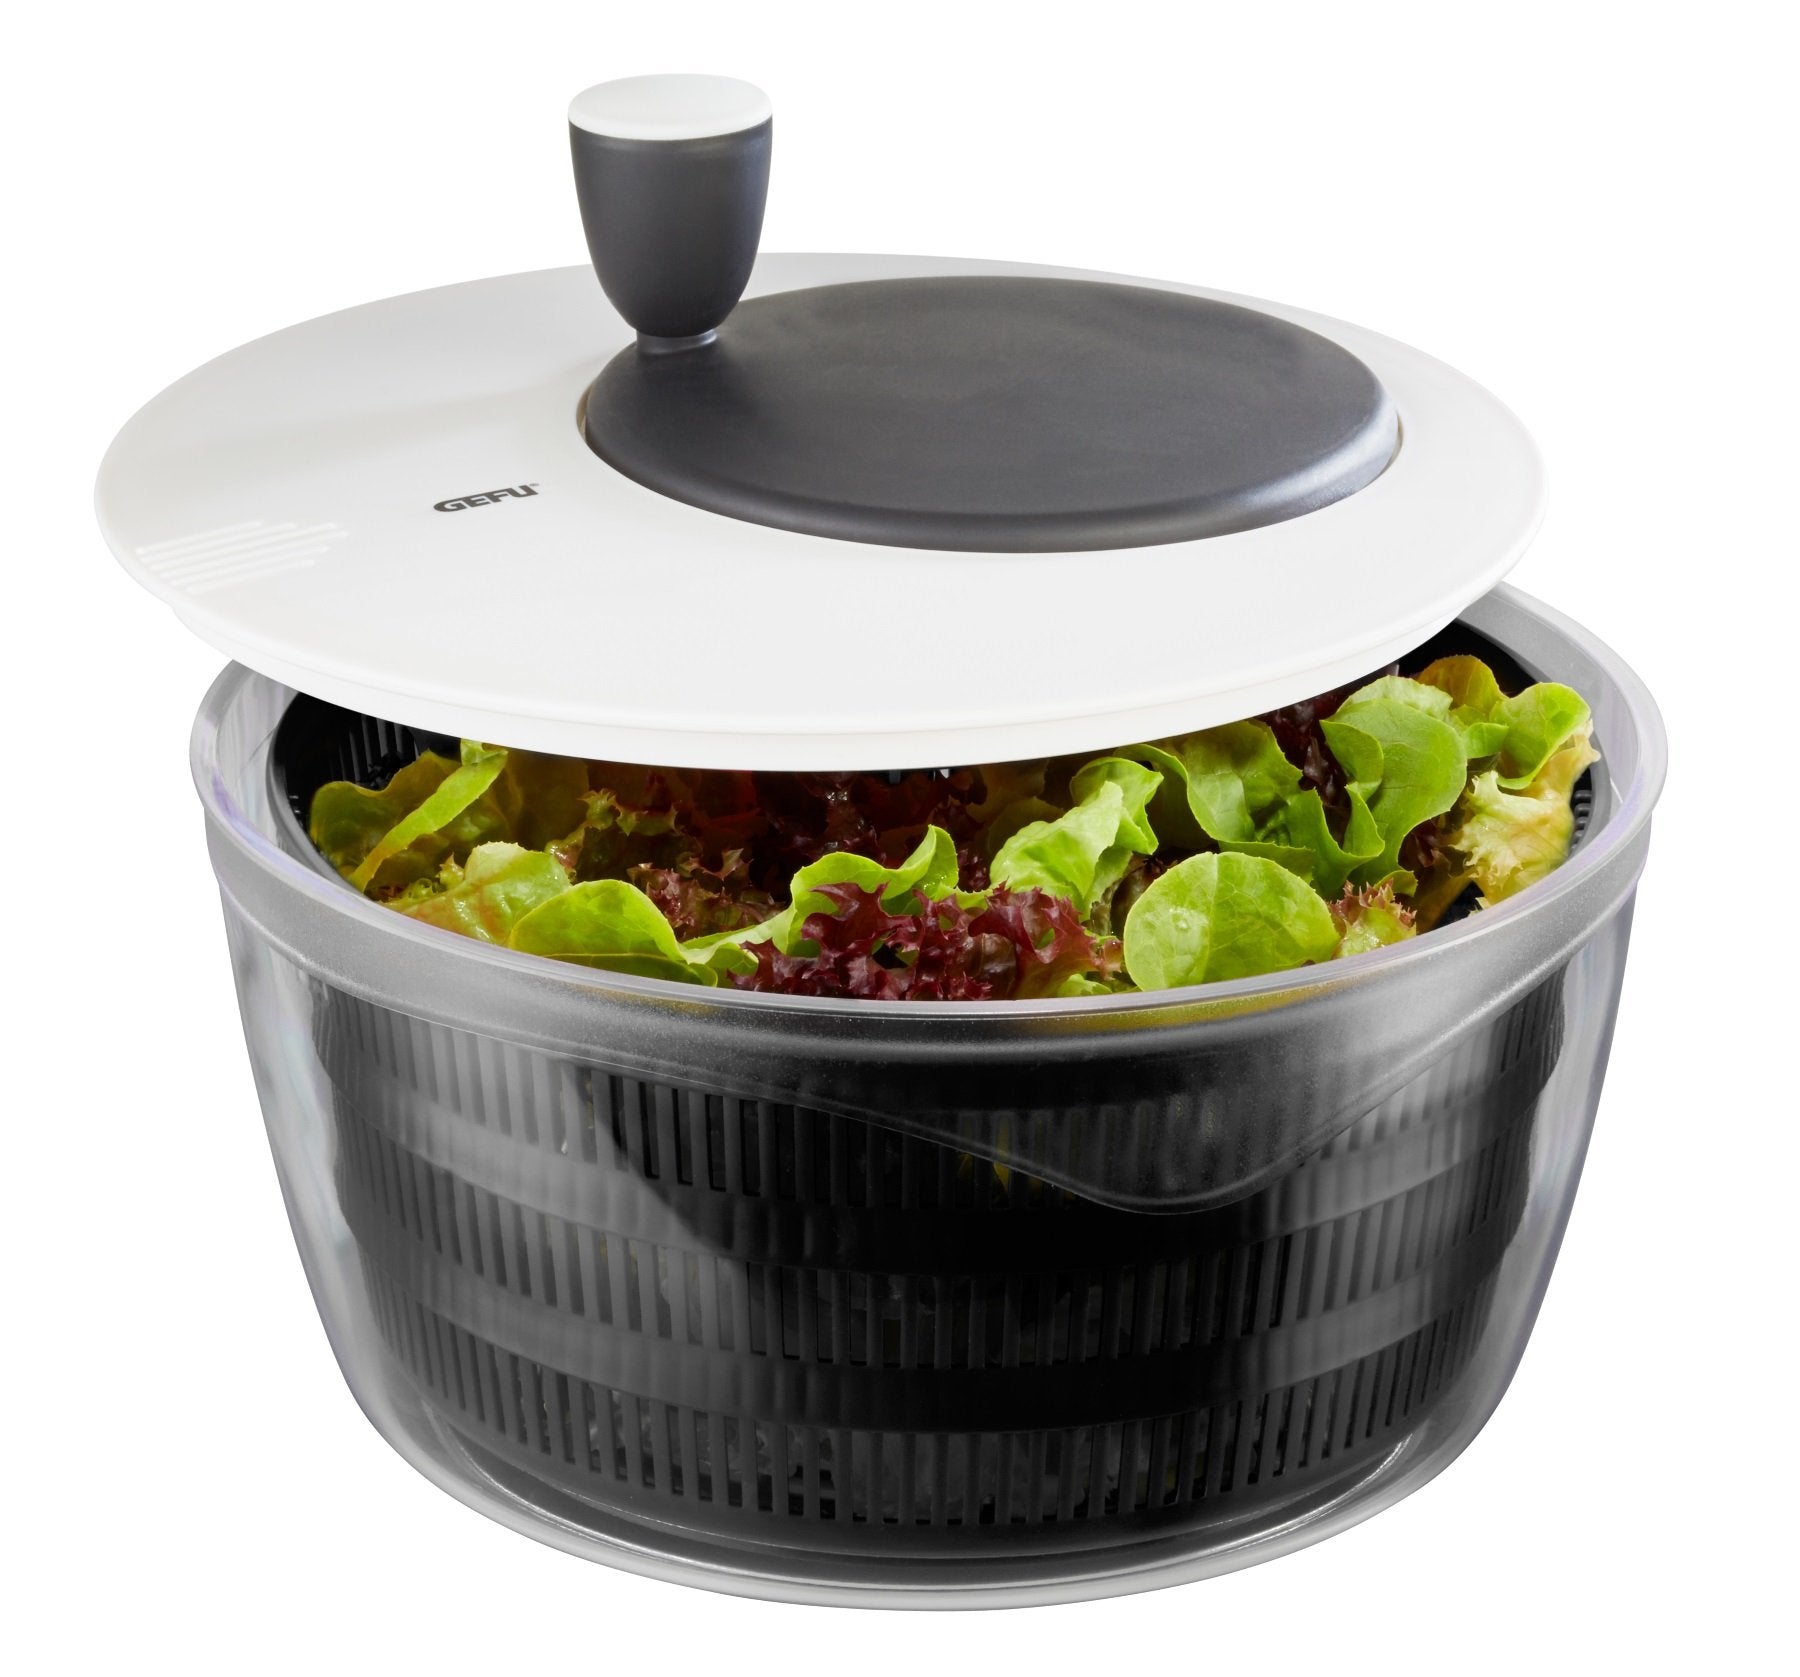 GEFU Salad Spinner Rotare - Whole and All